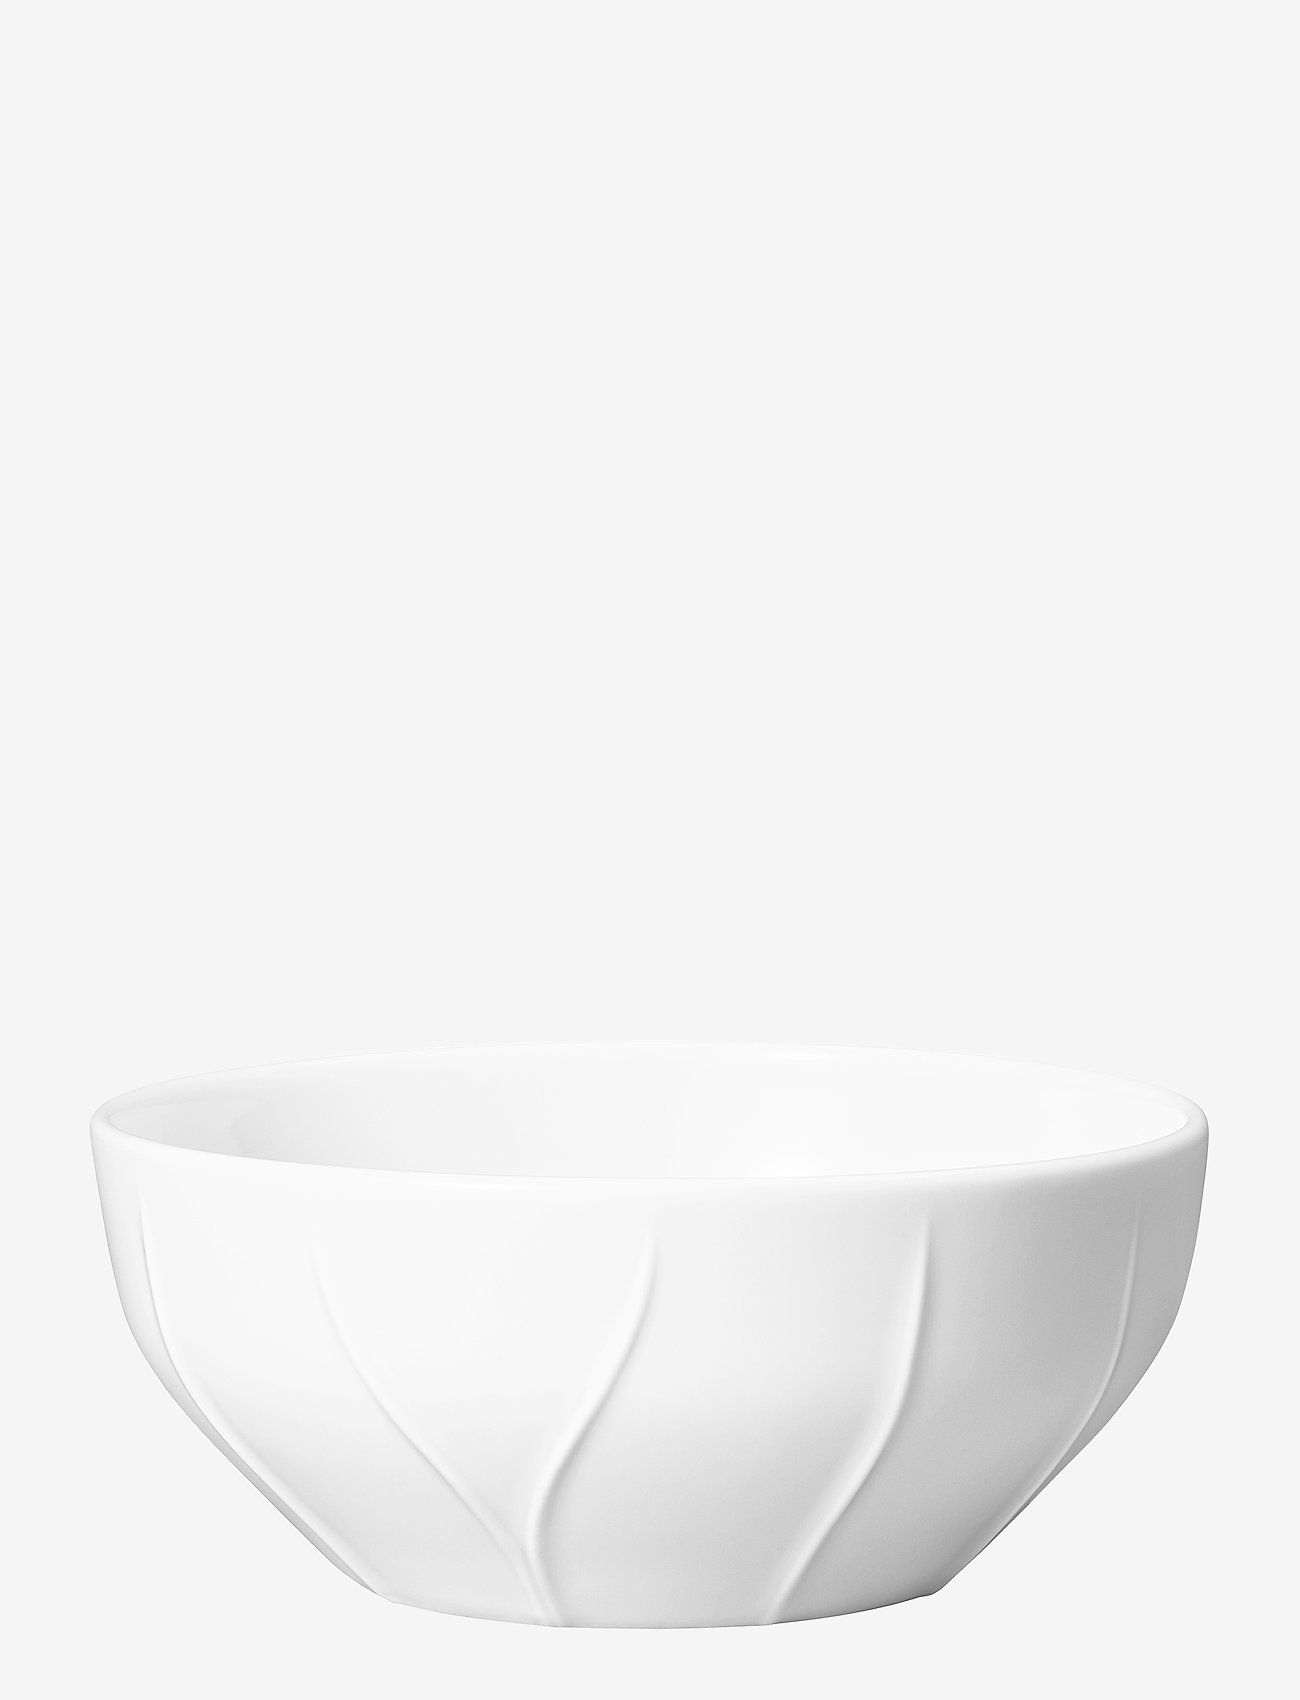 Rörstrand - Pli Blanc bowl - lowest prices - white - 0